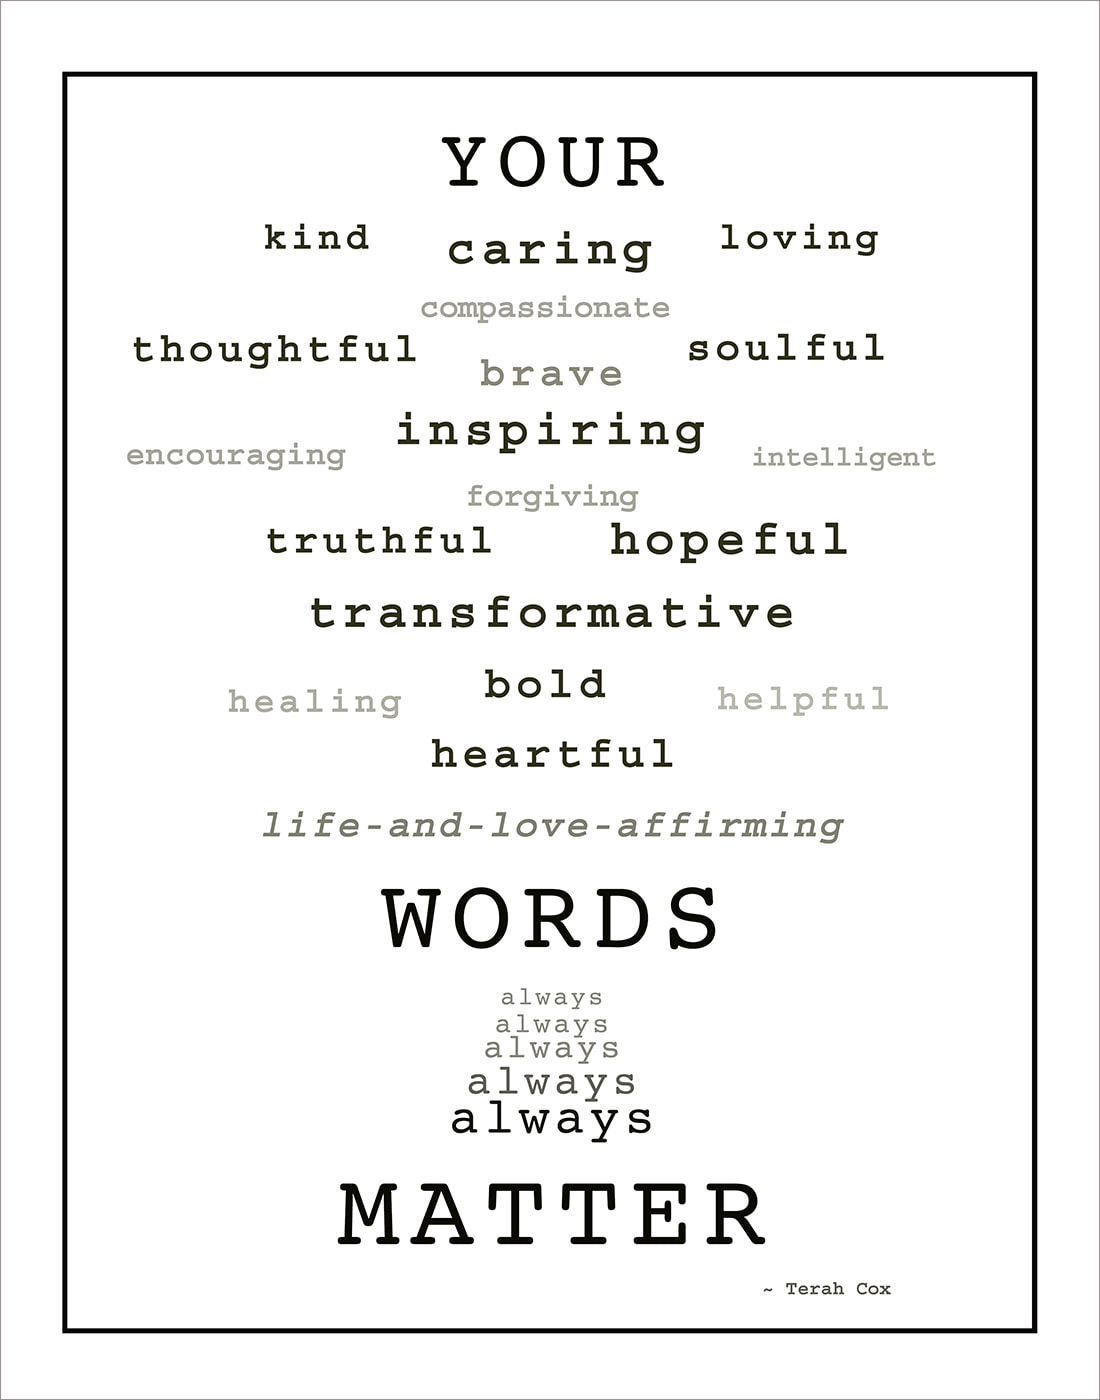 WORDS MATTER WALL POSTER - Your Words Matter